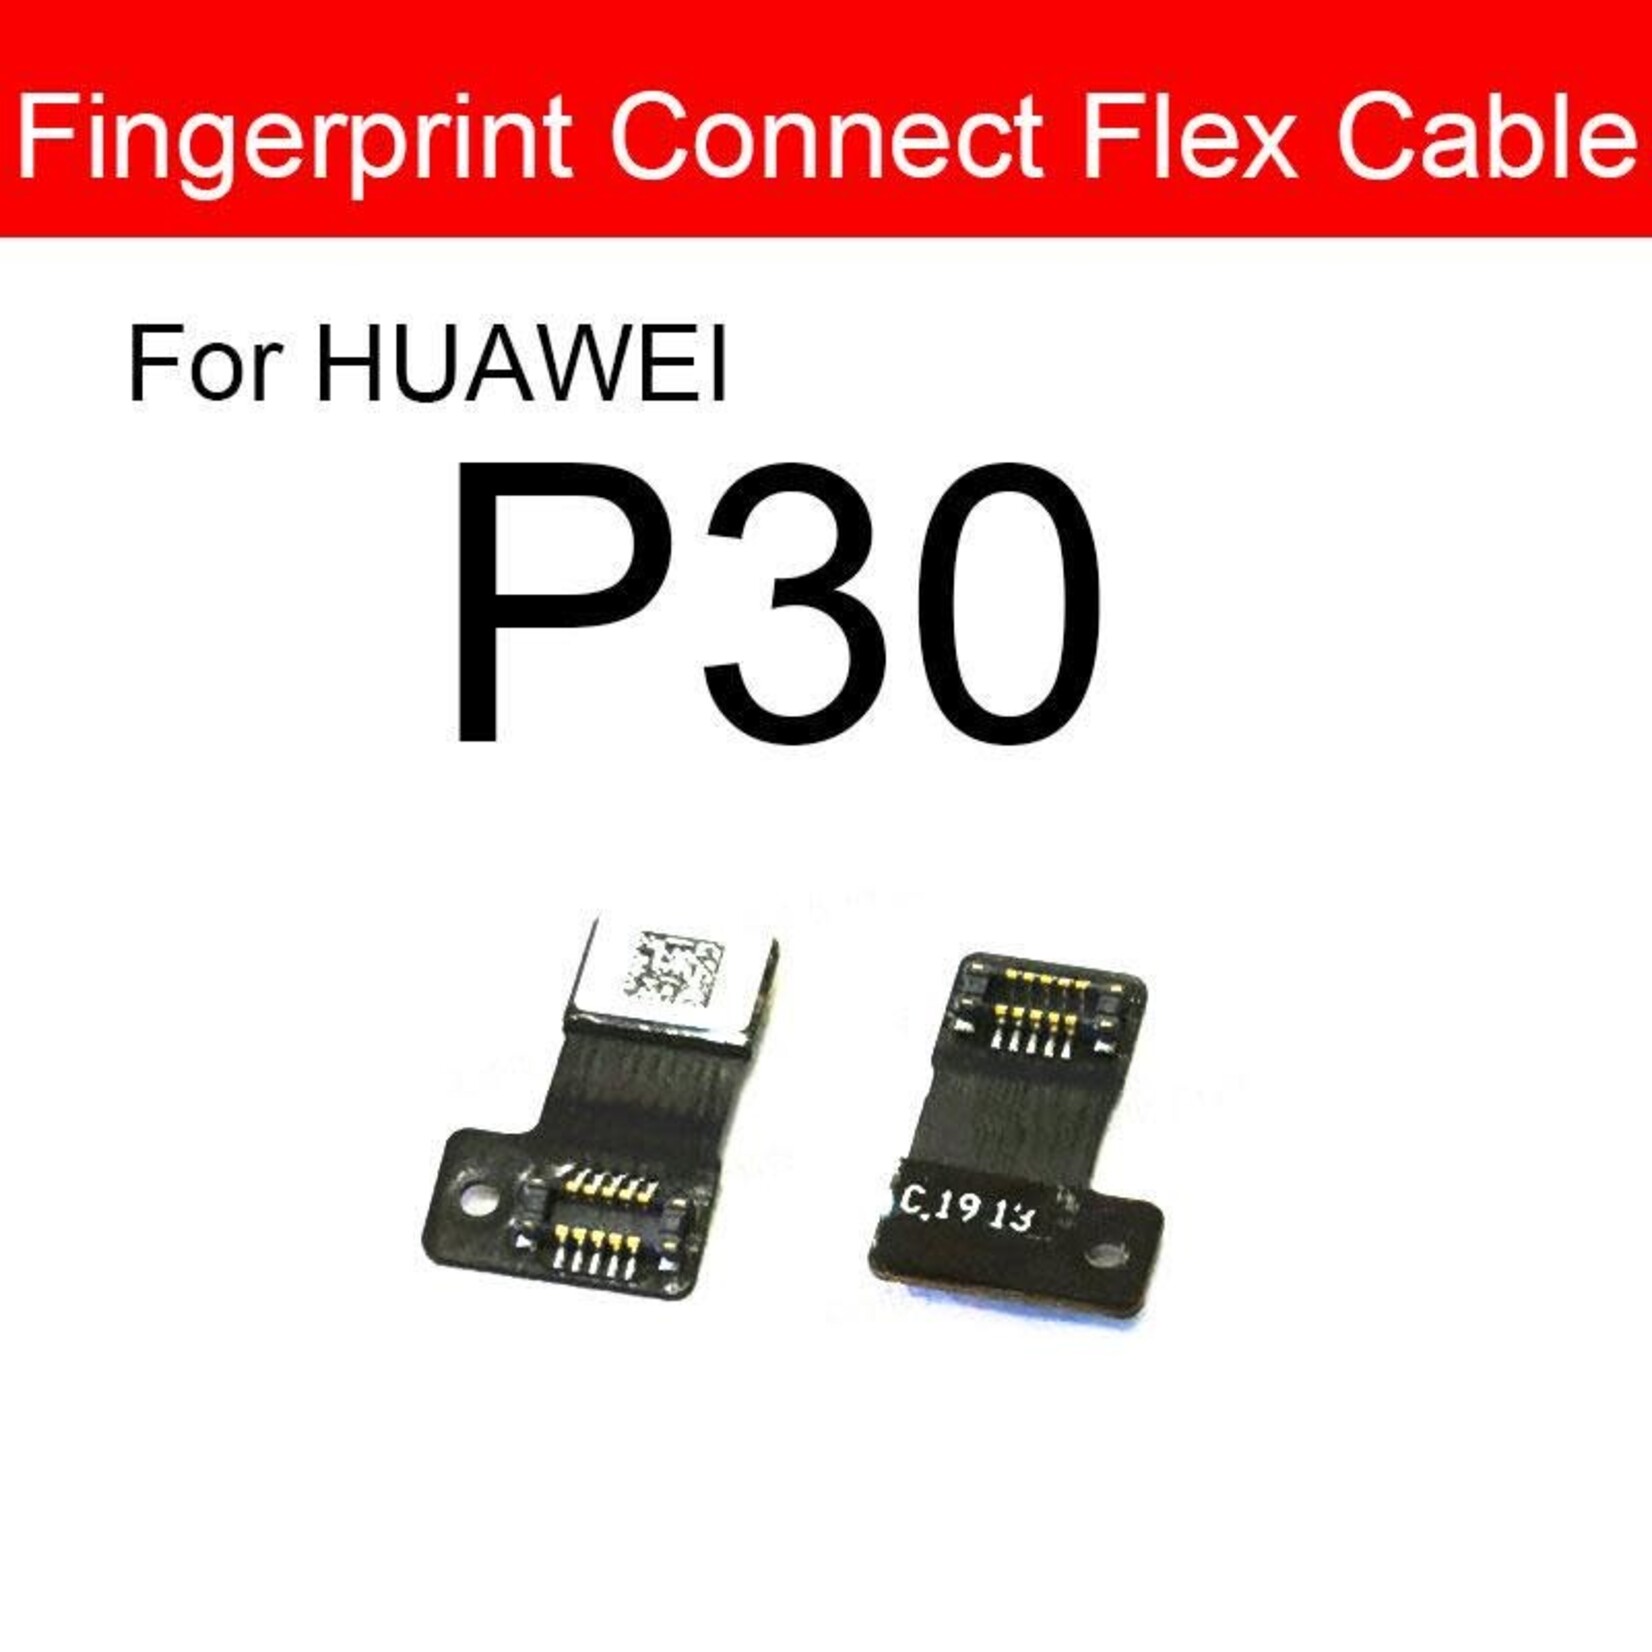 Huawei connector flex for fingerprint for Huawei P30 ELE-L29 ELE-L09